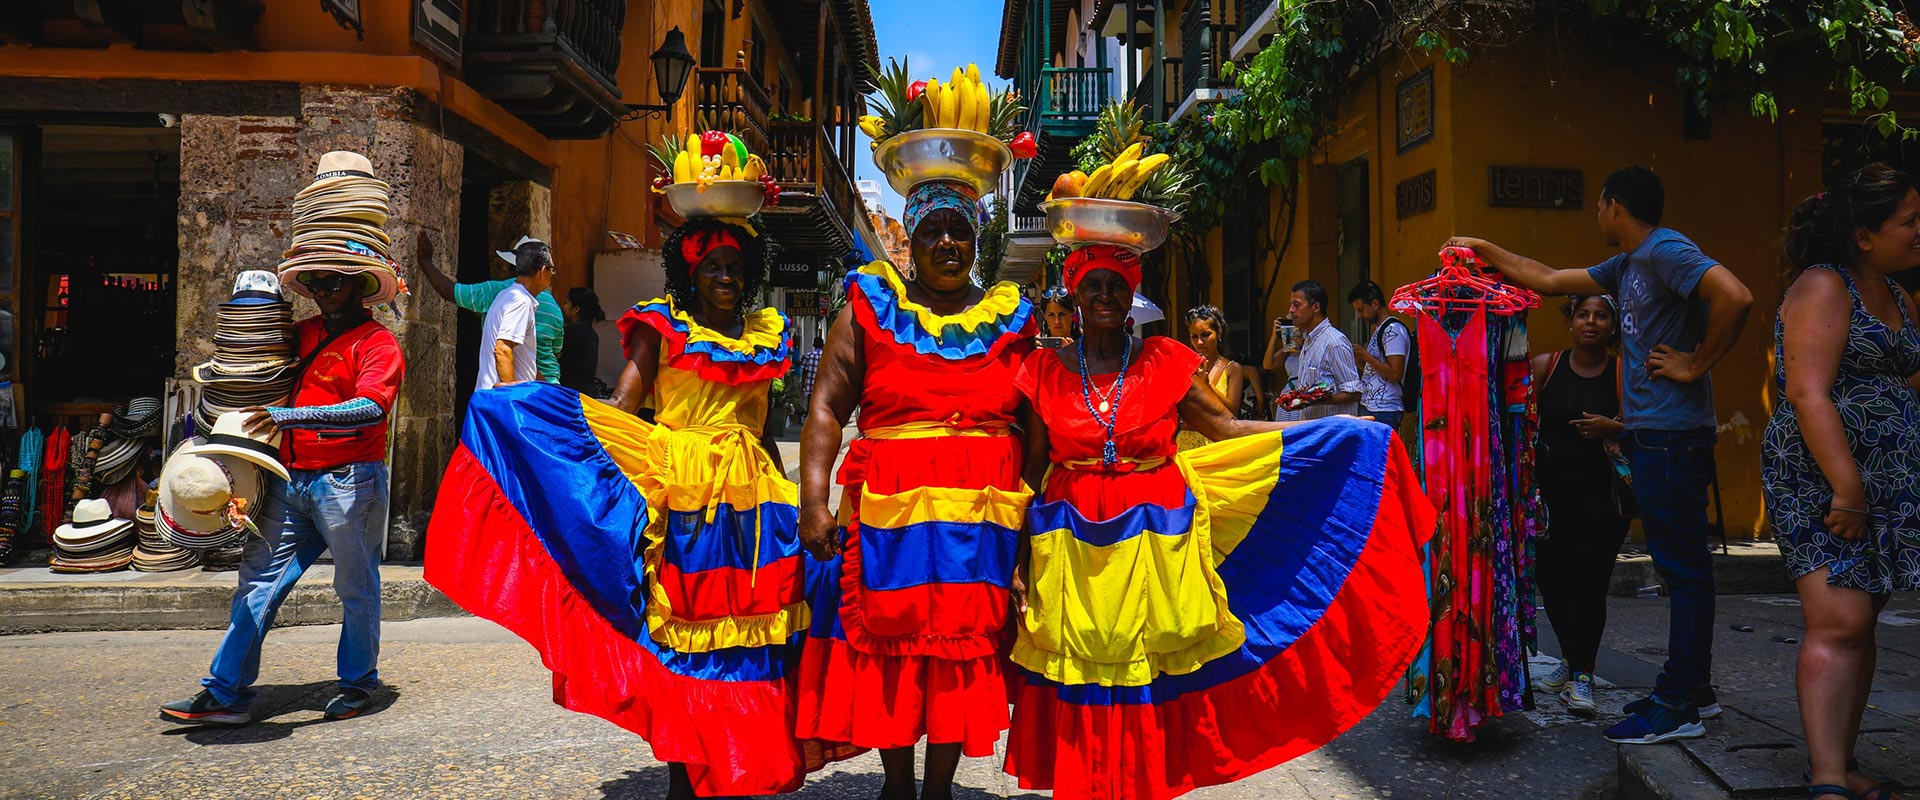 CU RUNDREISE Festival del Caribe - Fiesta del Fuego SCU Slider 1